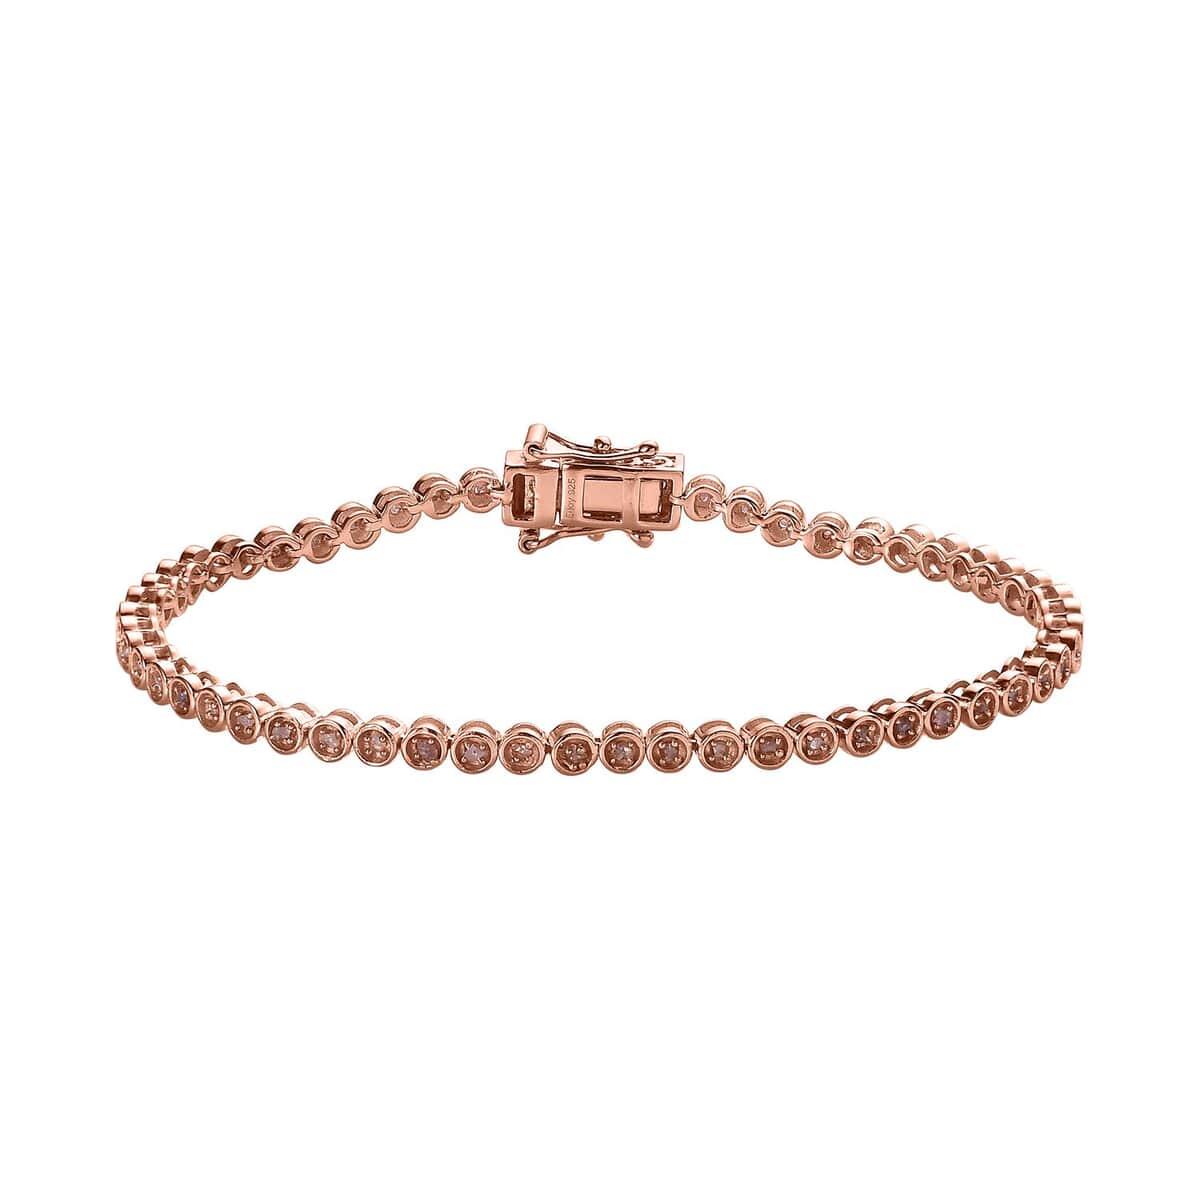 Buy Uncut Natural Pink Diamond Tennis Bracelet, Pink Diamond Bracelet, Vermeil  Rose Gold Over Sterling Silver Bracelet (7.25 In) 0.50 ctw at